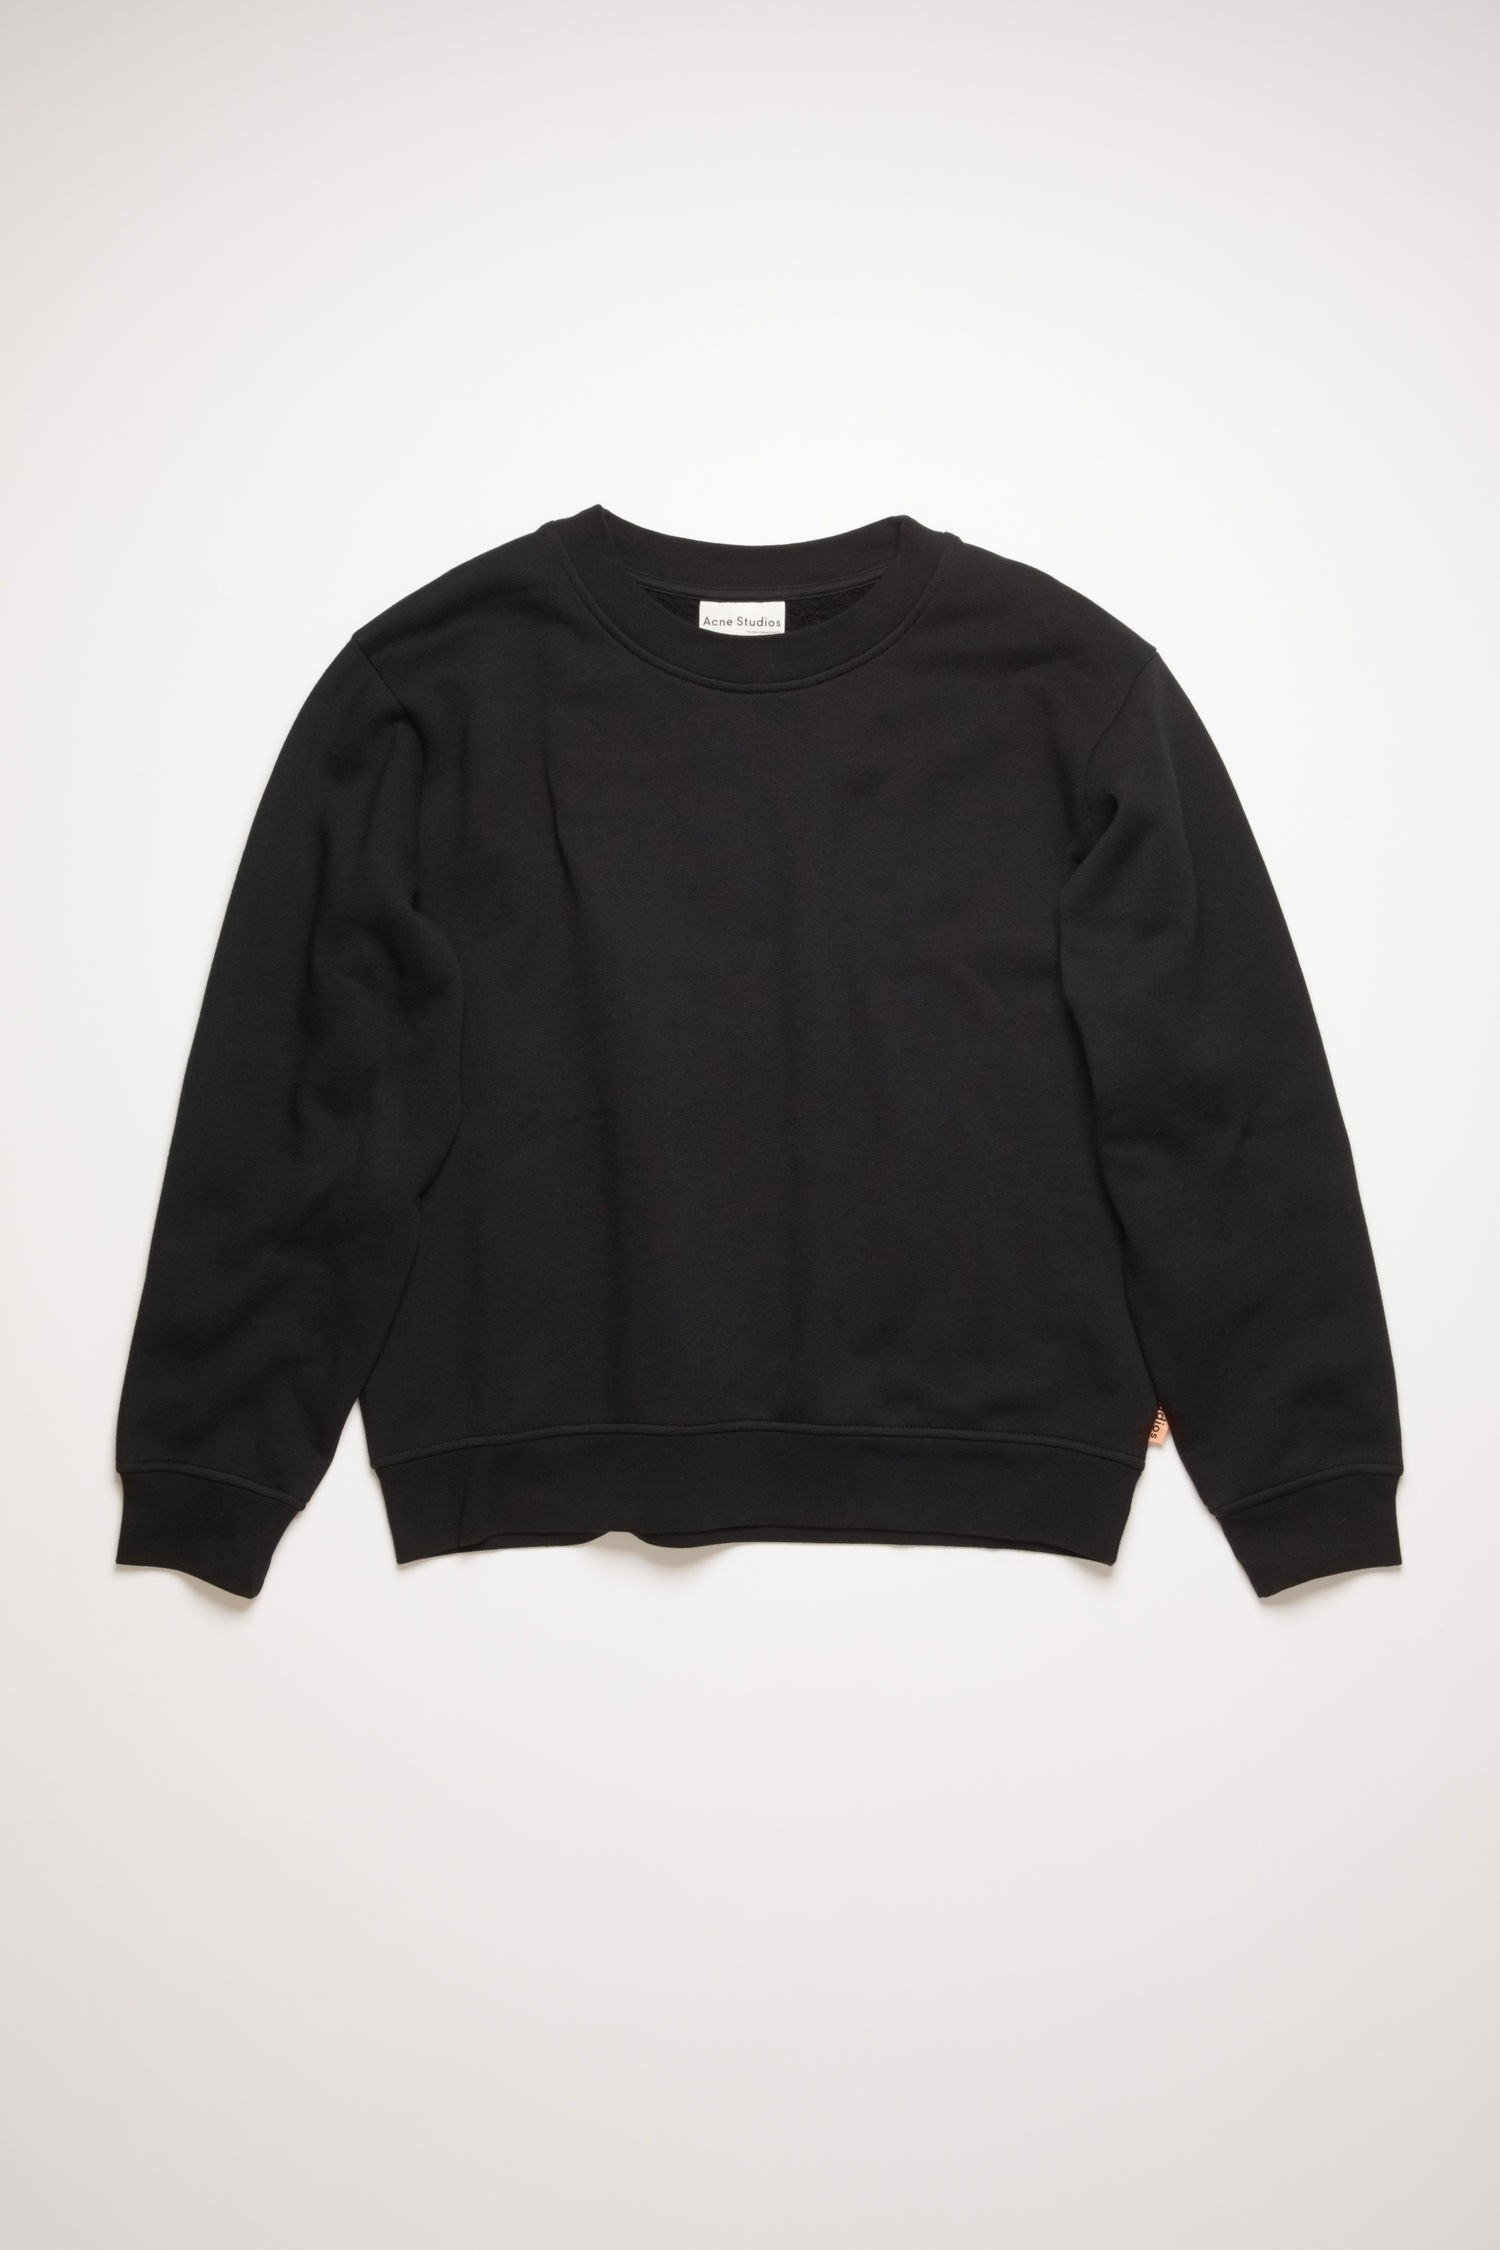 Acne Studios Classic Fit Sweatshirt on Sale, SAVE 30